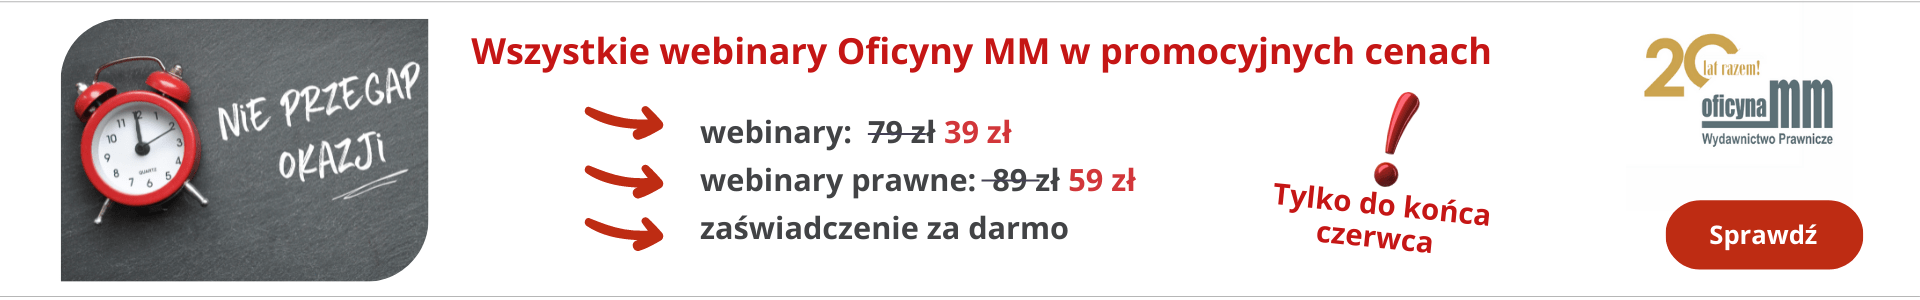 Oficyna MM